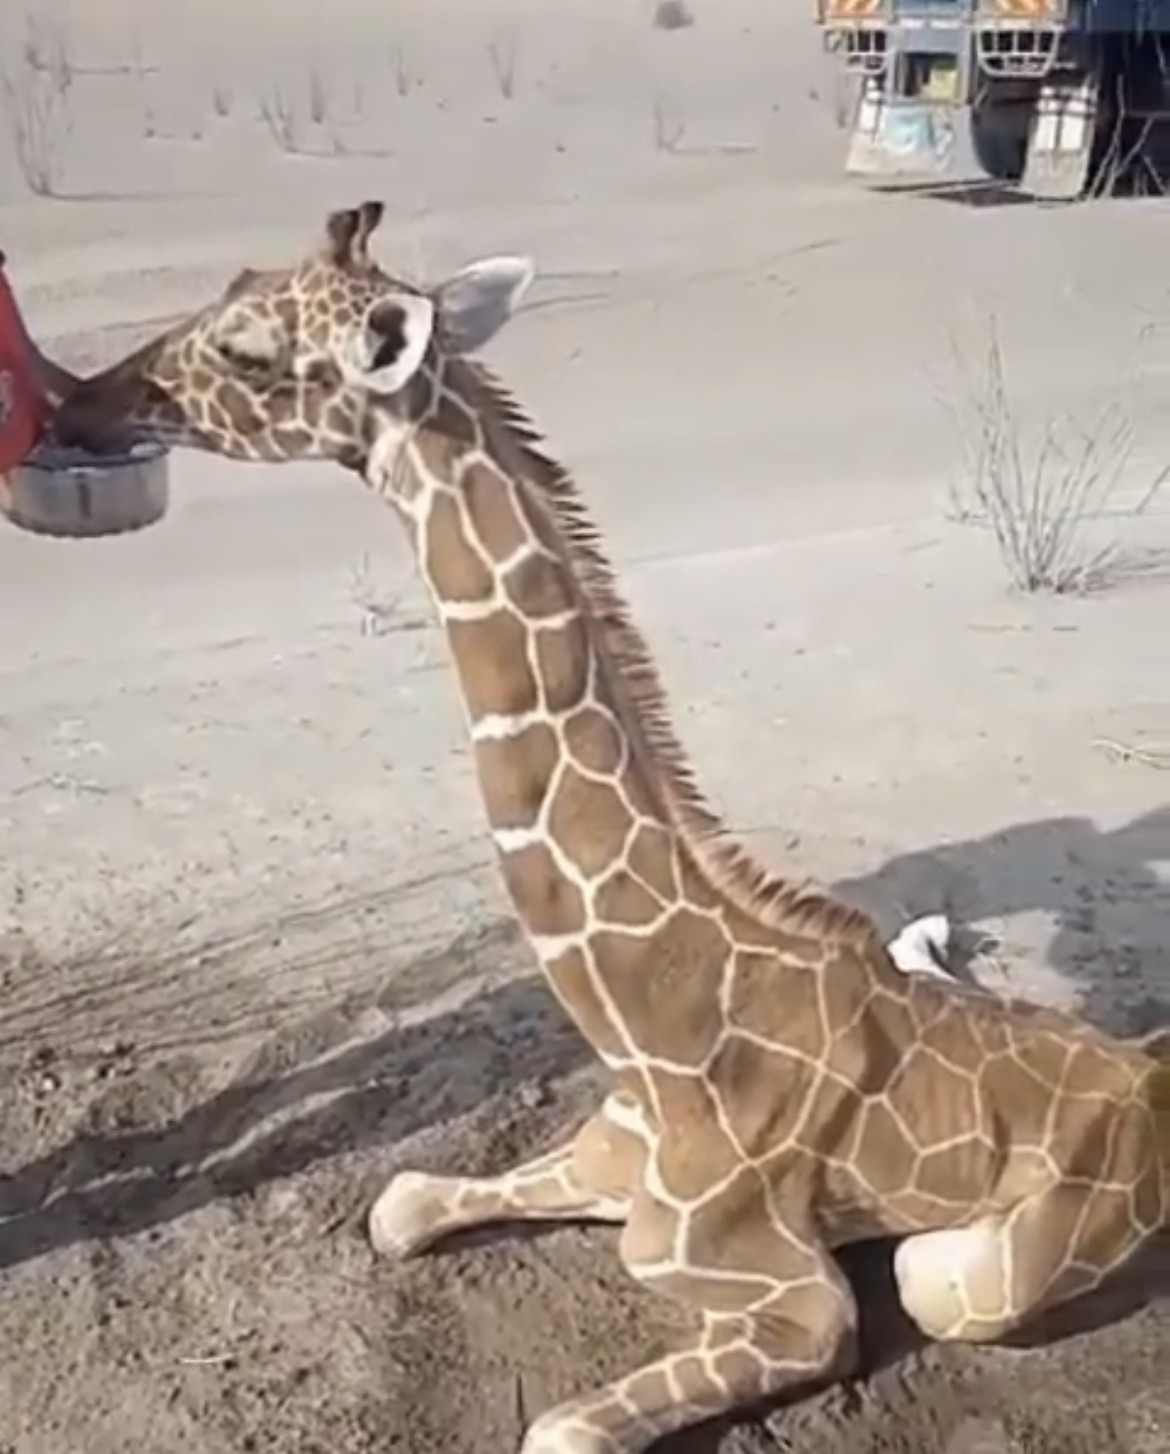 Water aid to juvenile giraffe